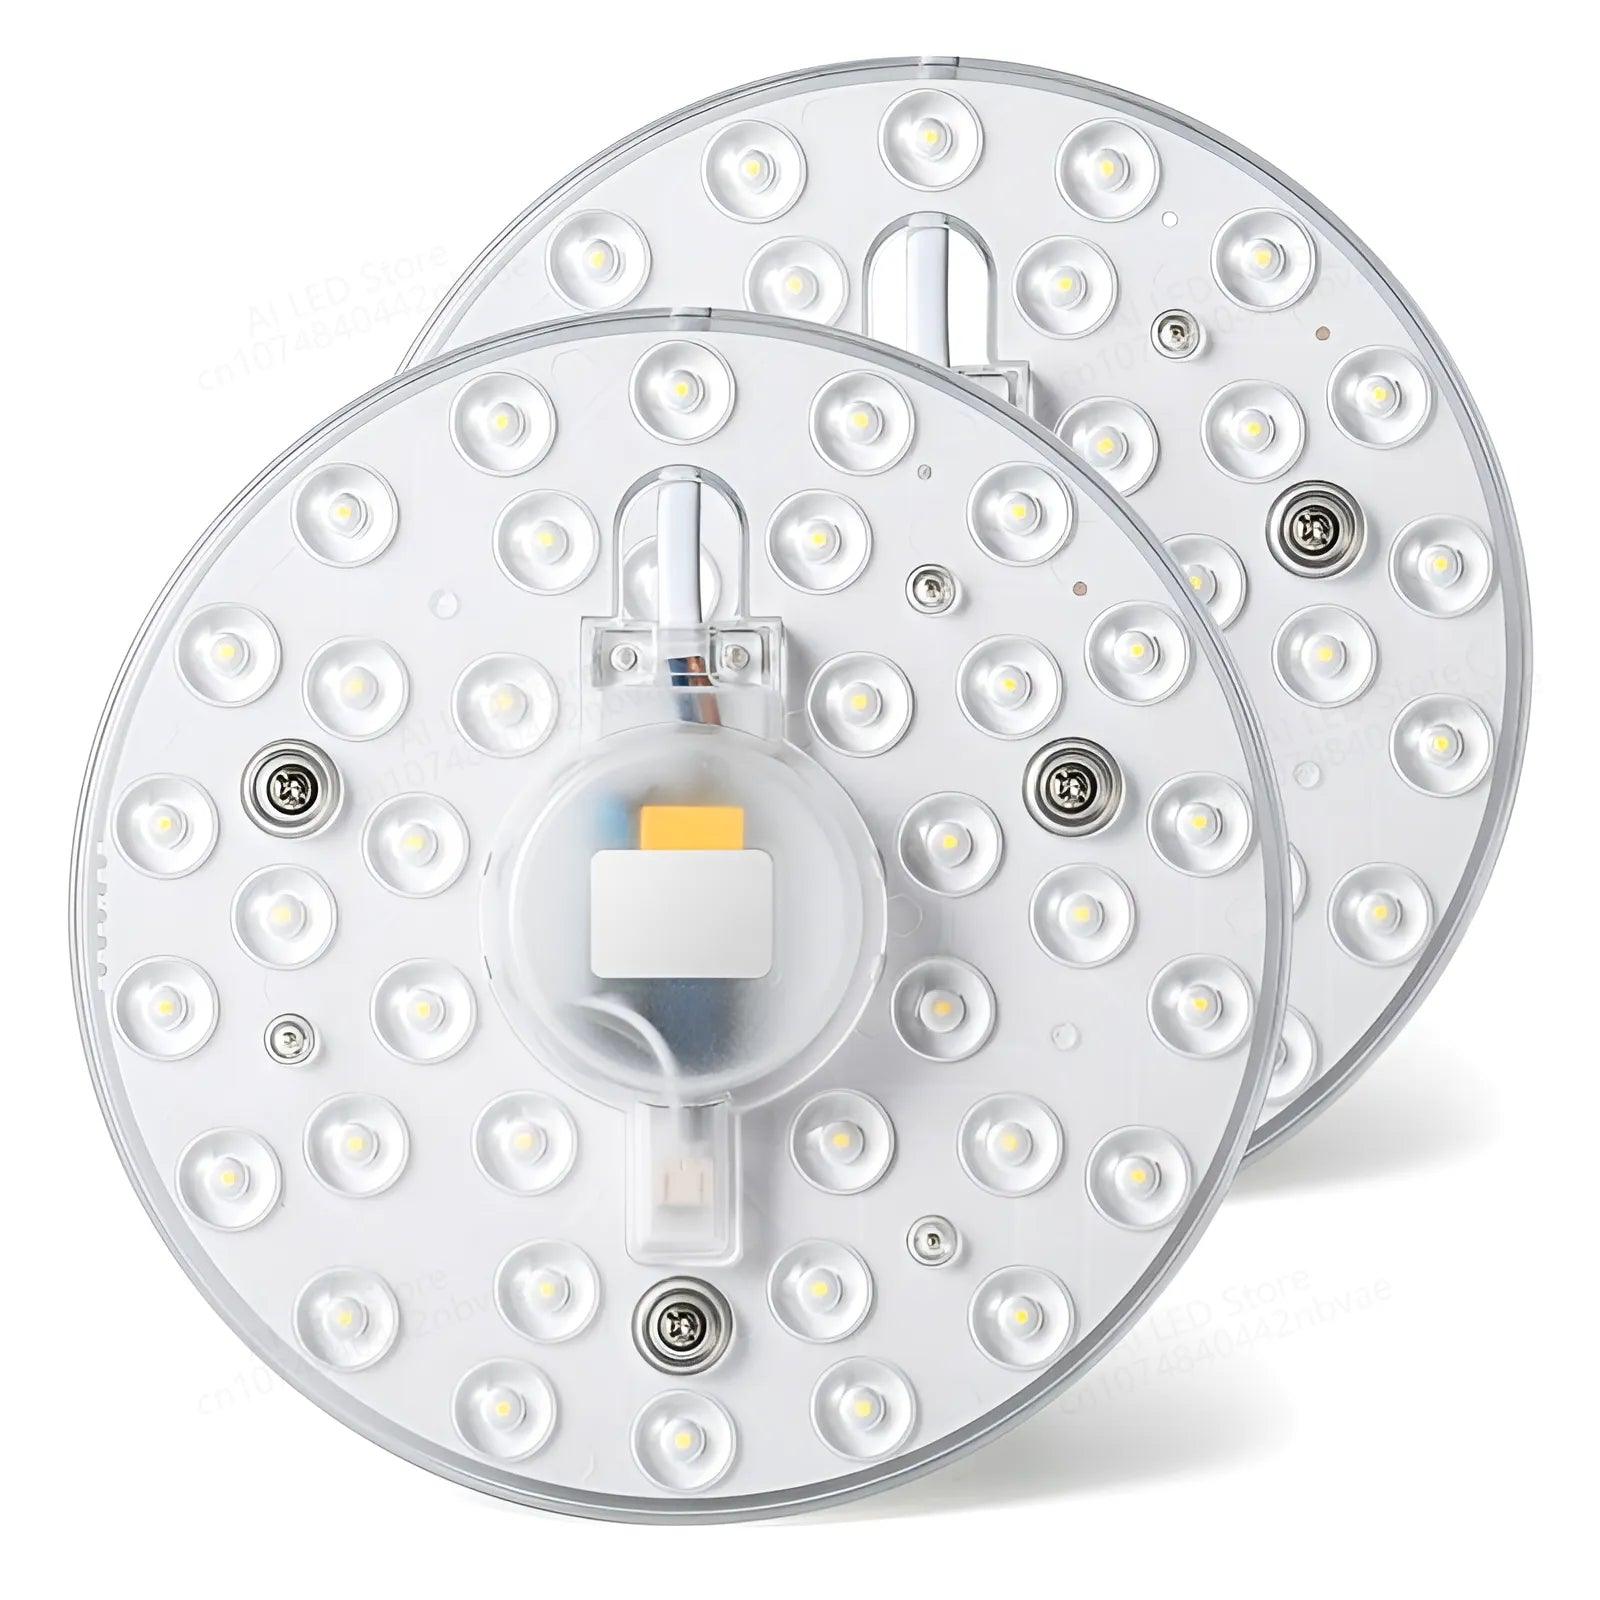 LED Circular Ceiling Panel Light - Powerful Illumination and Energy Efficient  ourlum.com   